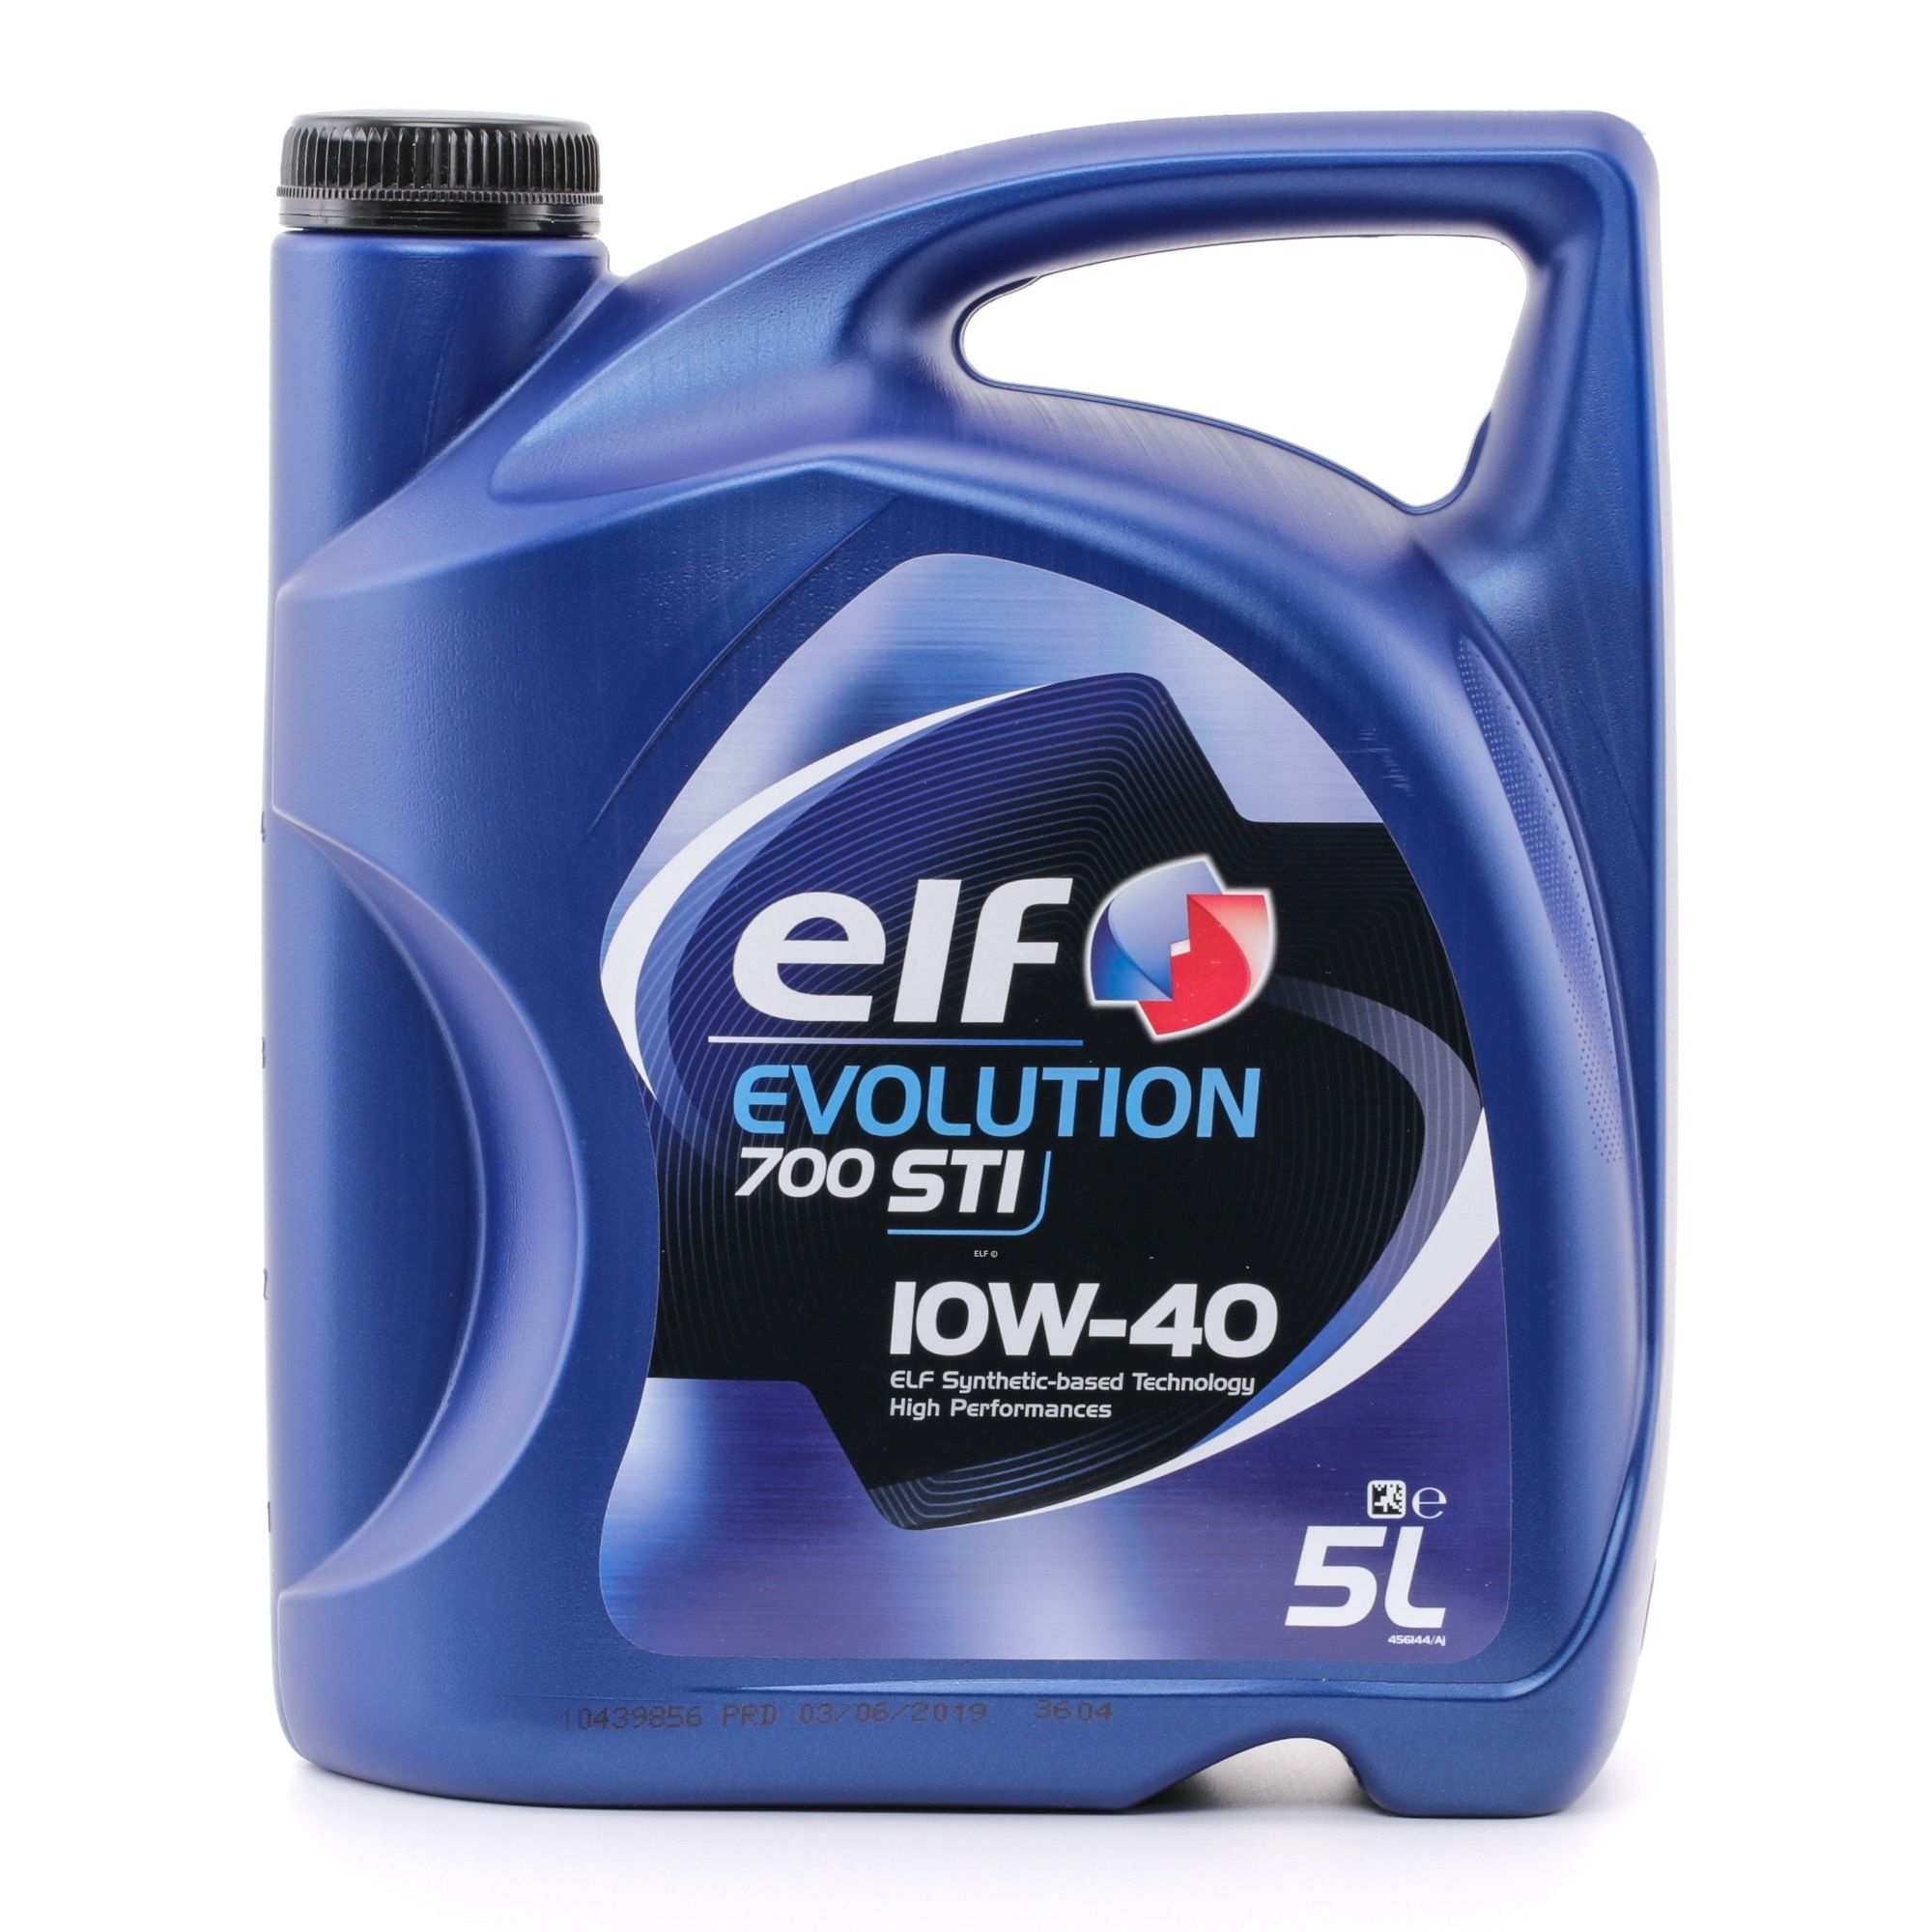 Renault Oliën & vloeistoffen onderdelen - Motorolie ELF 2202840